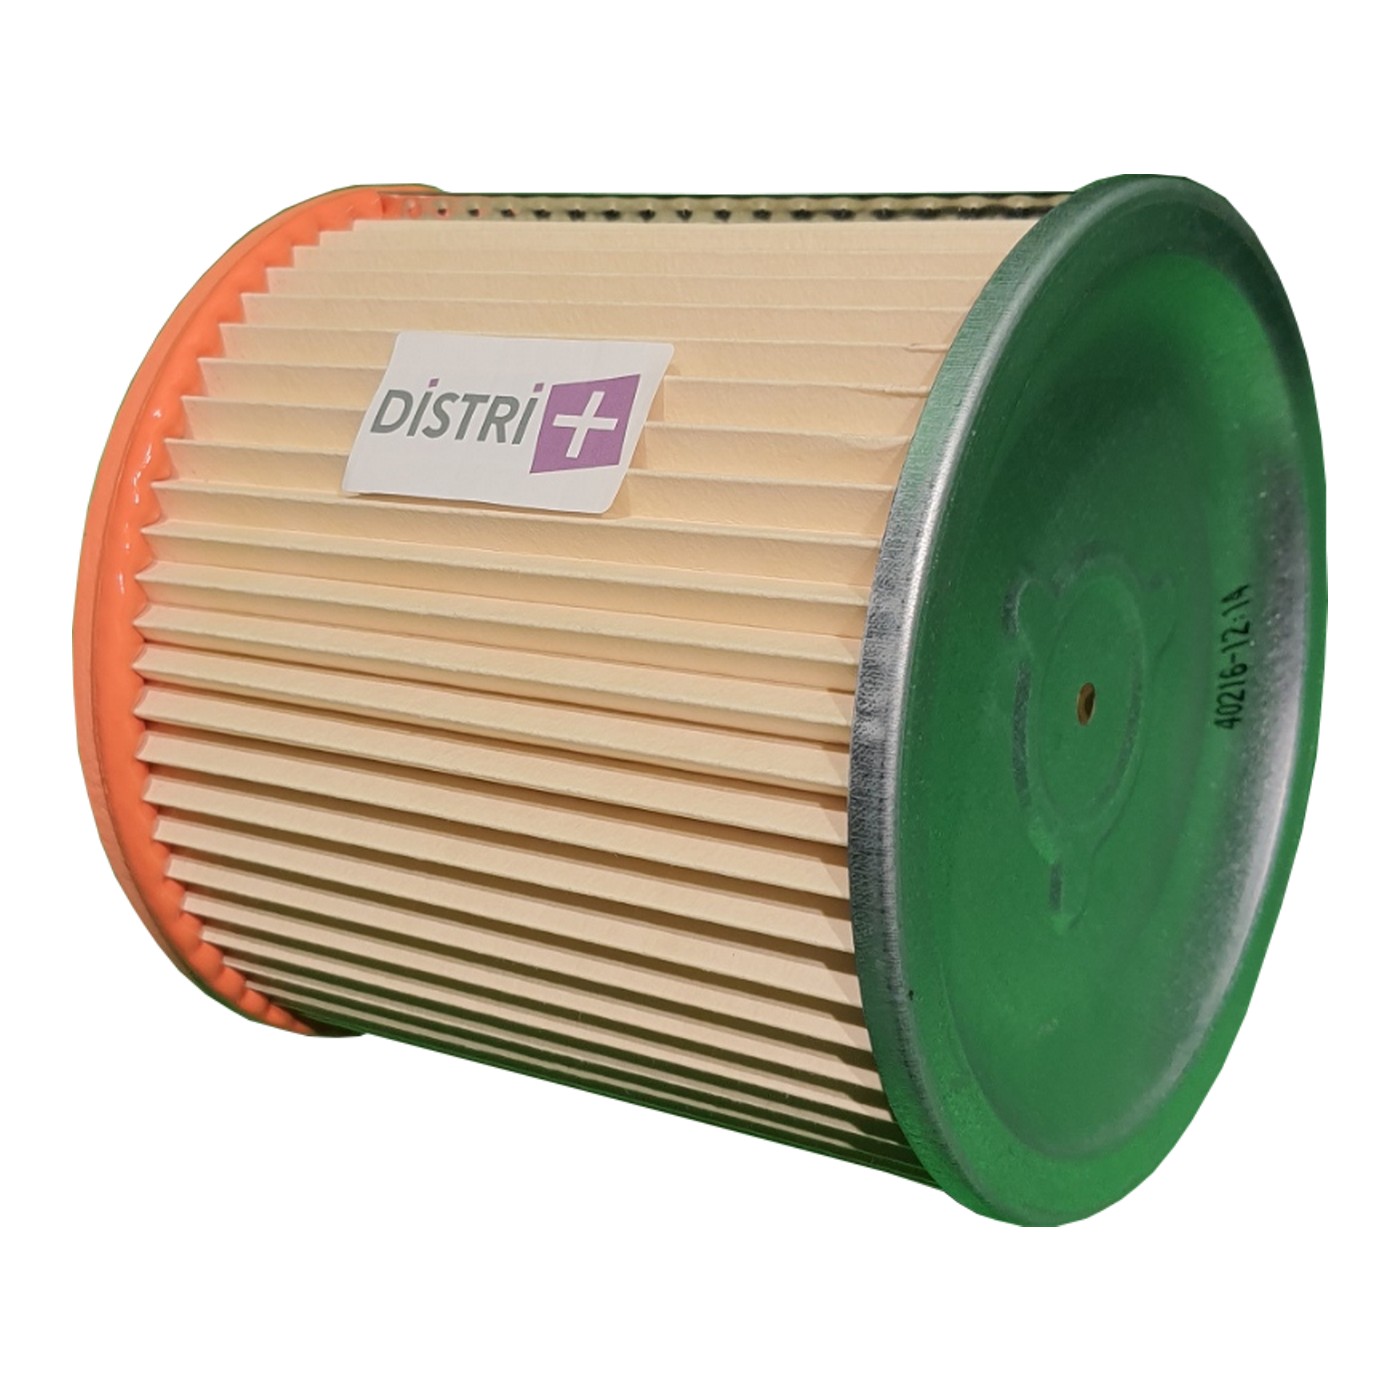 Cartouche filtre pour aspirateur s'adapte sur : ELECTROLUX, FIRSTLINE, HOOVER, TORNADO, VOLTA, WHITE AND BROWN